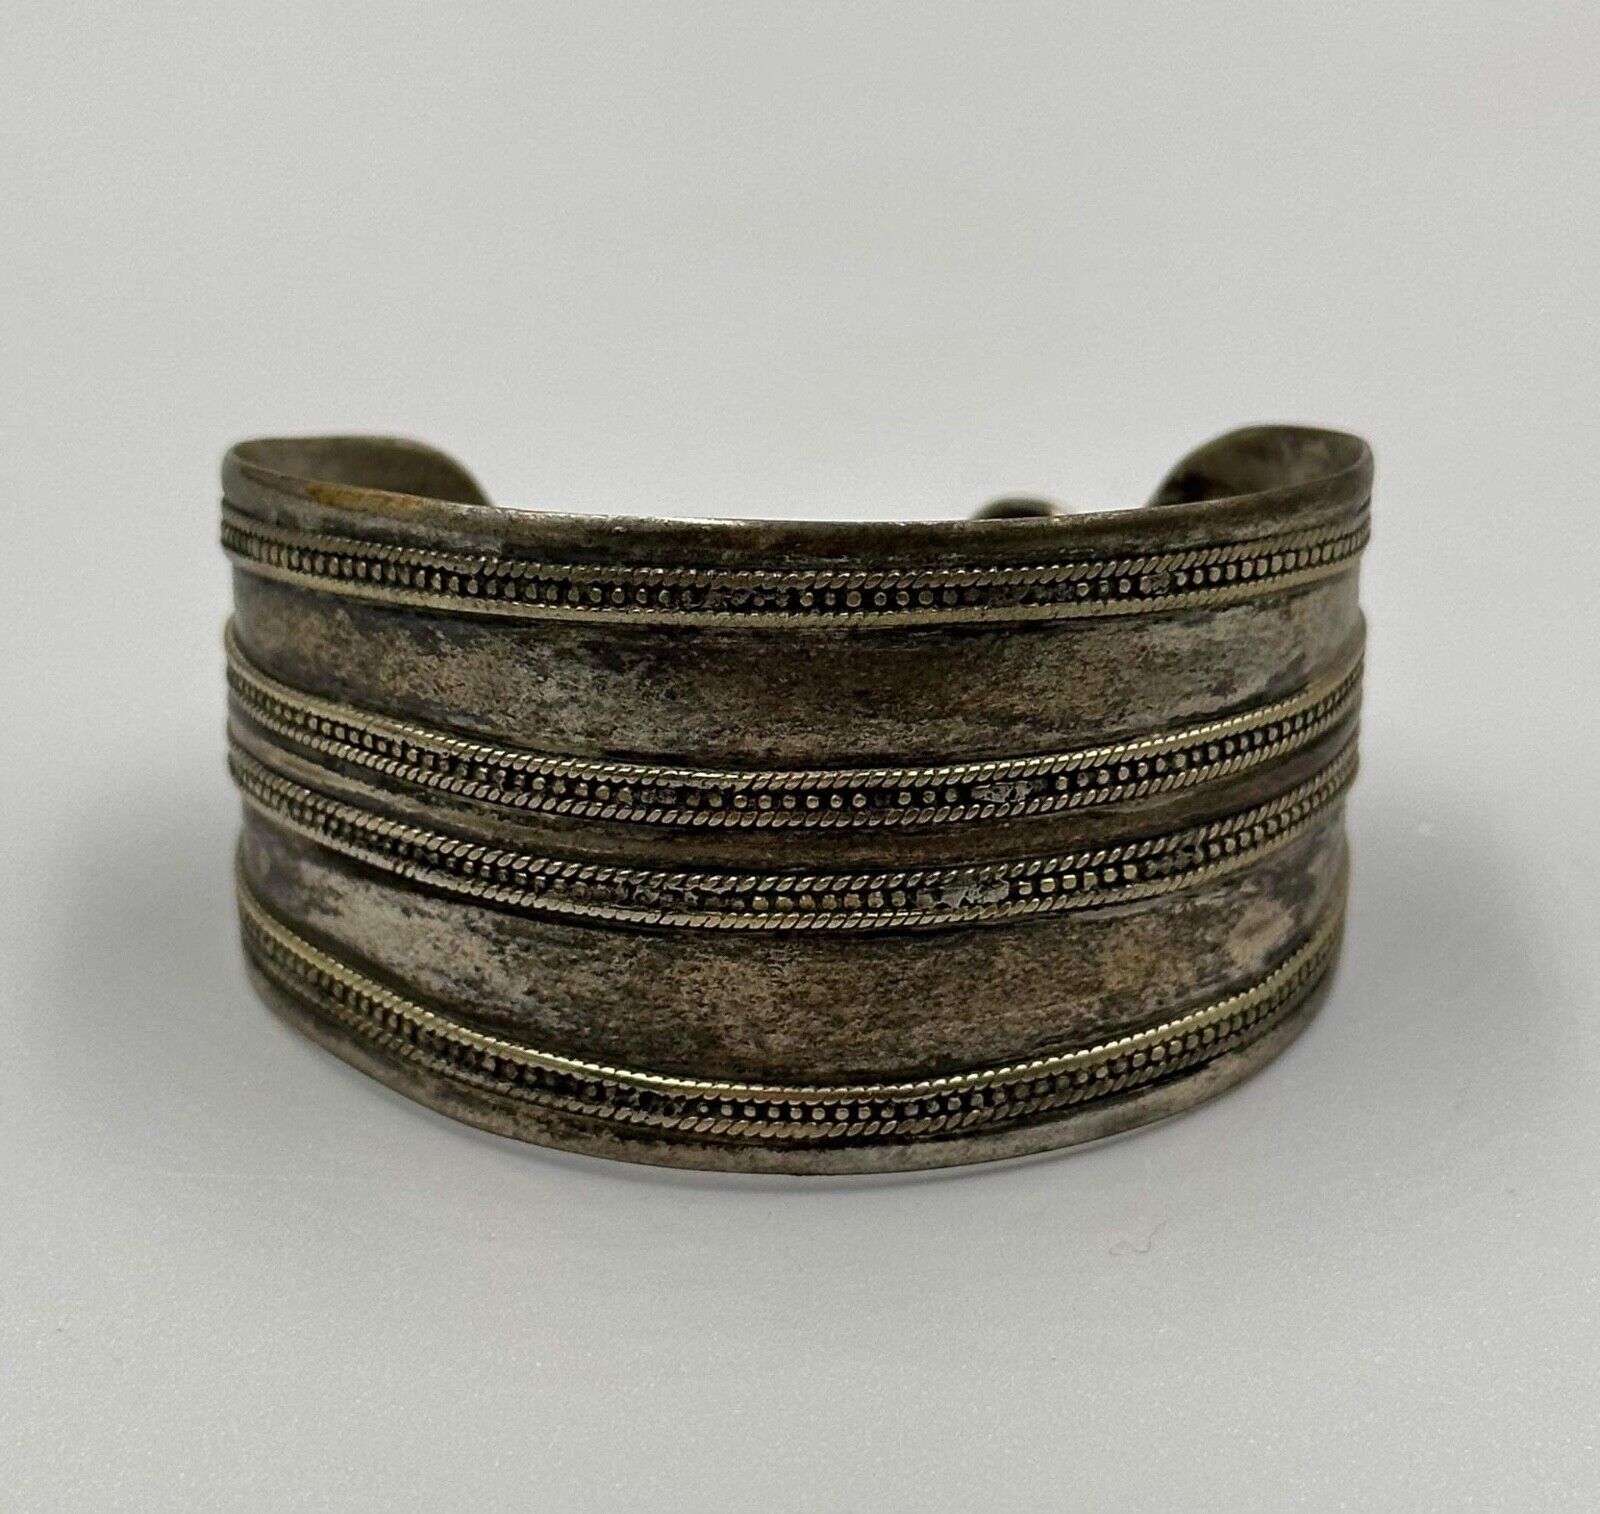 Wonderful unique Antique Afghanistan Stunning antique Silver bracelet